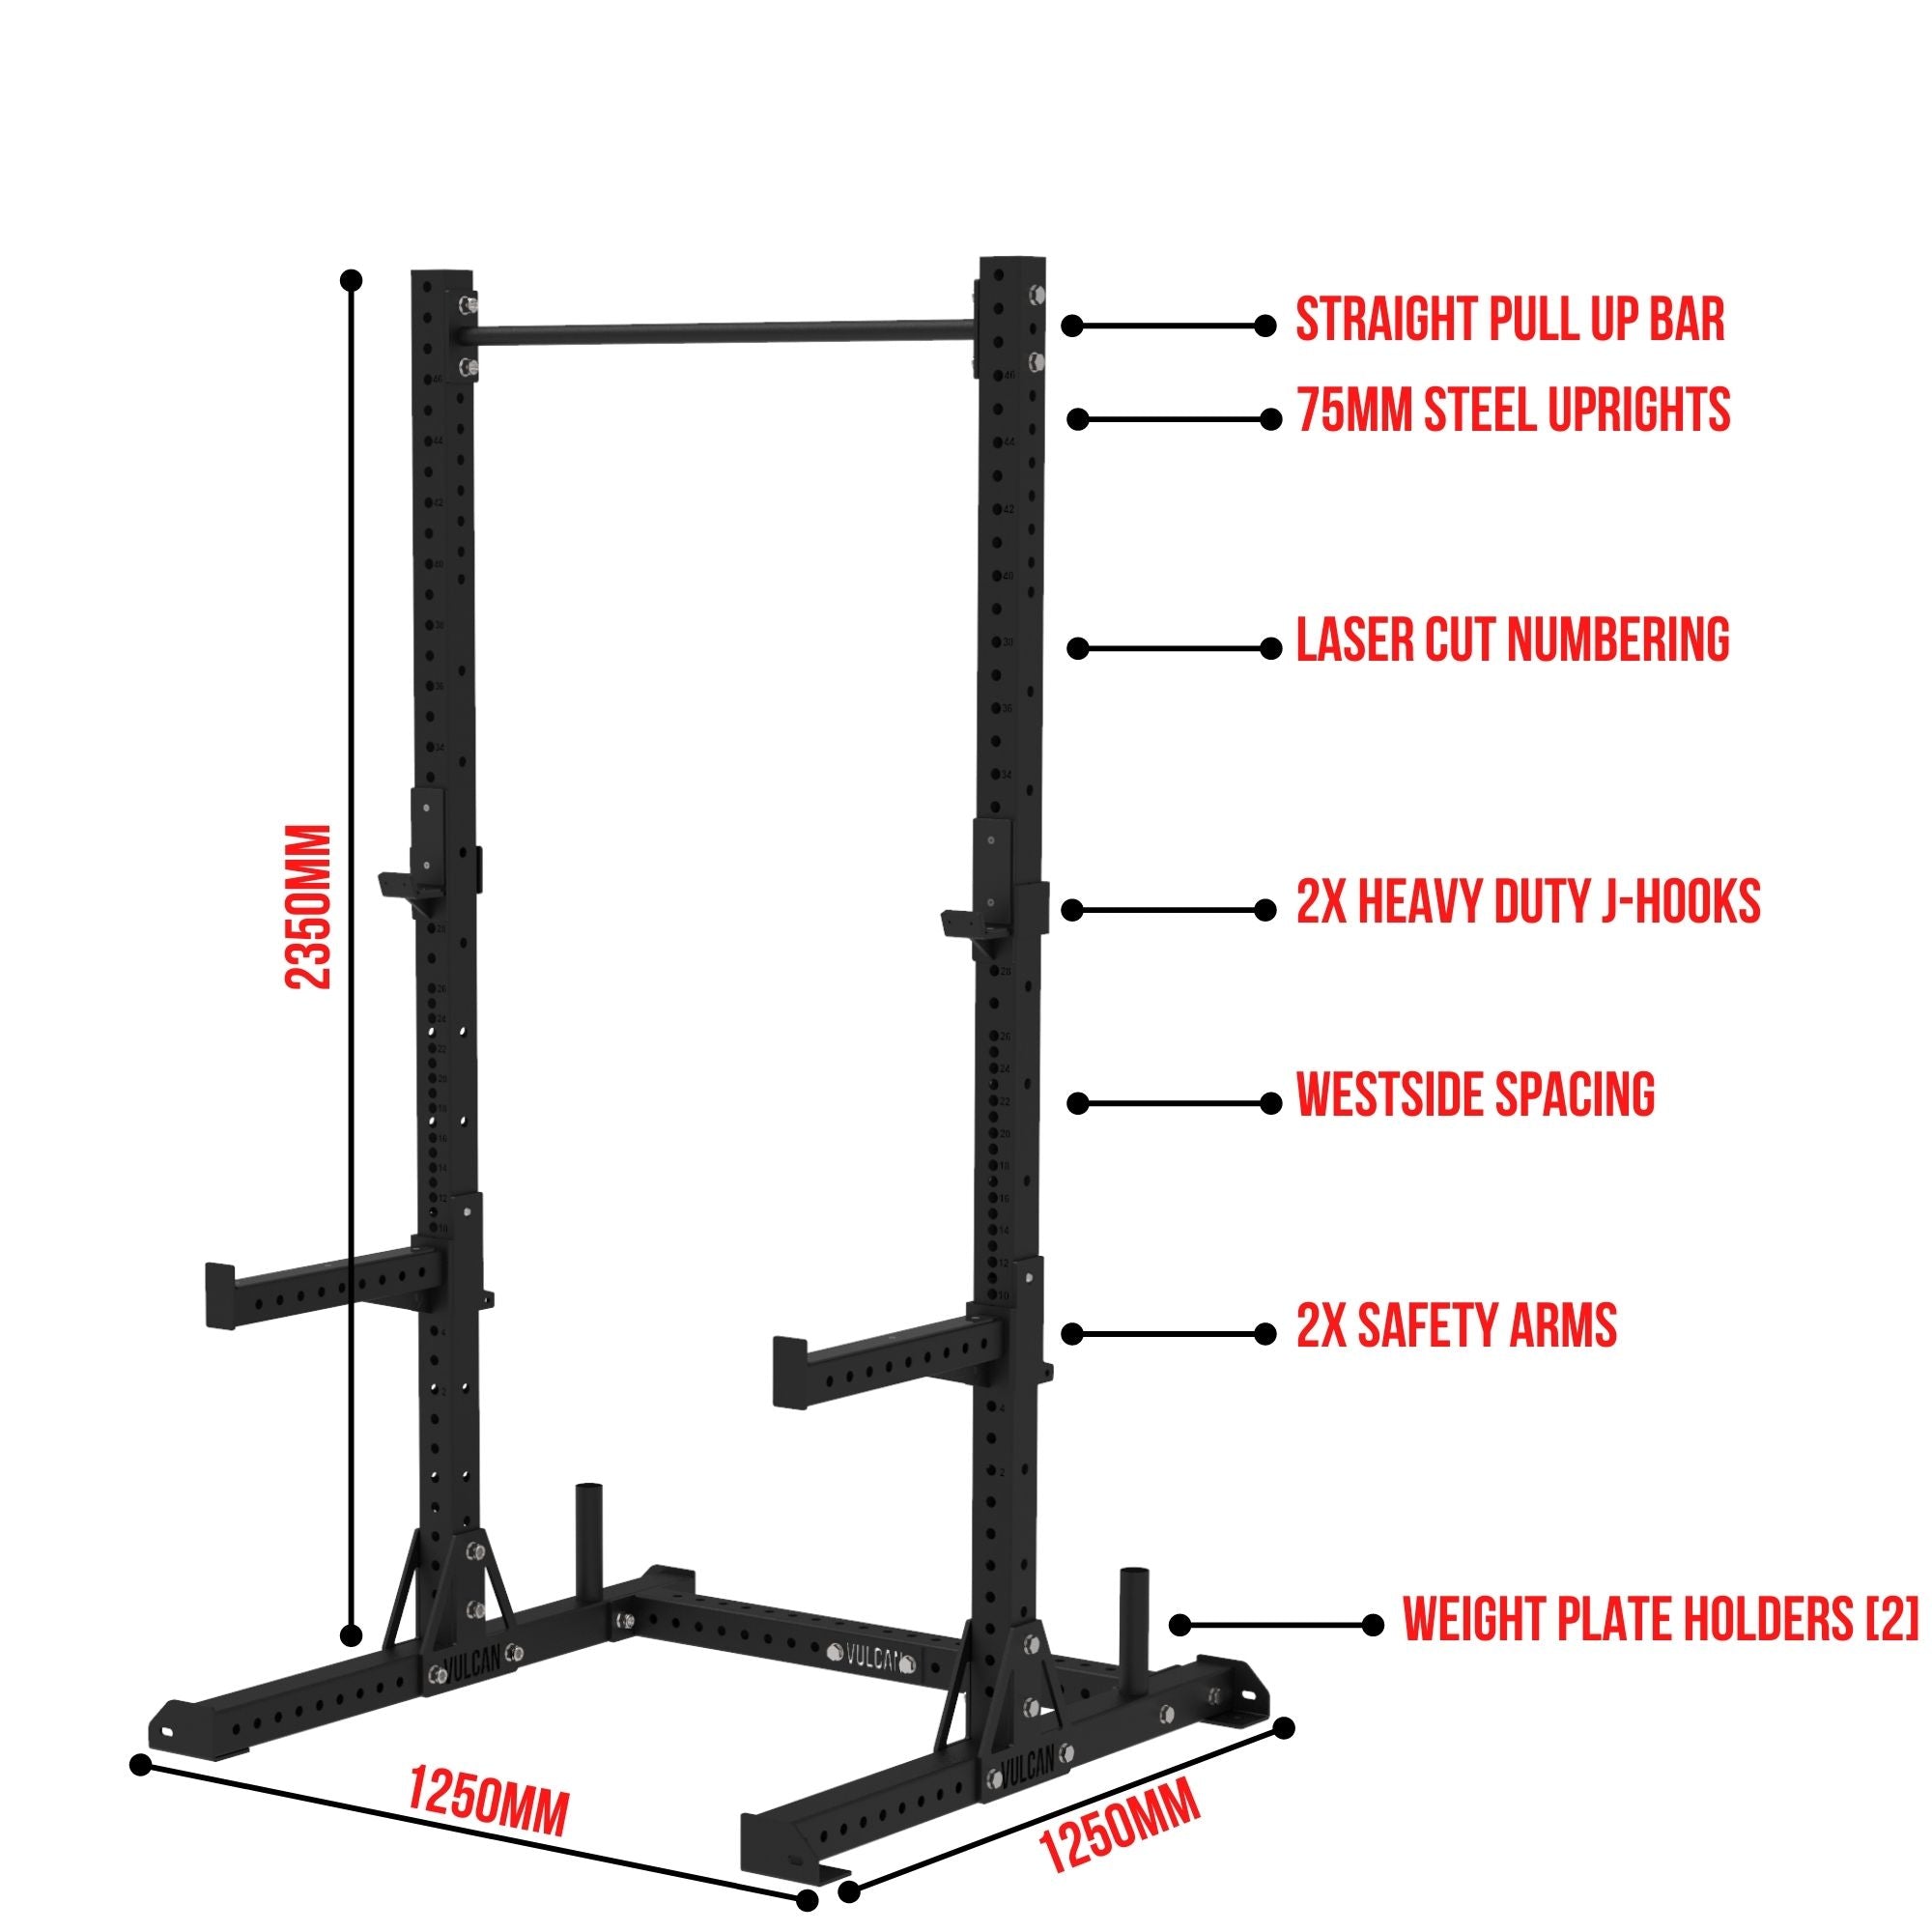 dimensions of commercial squat rack 